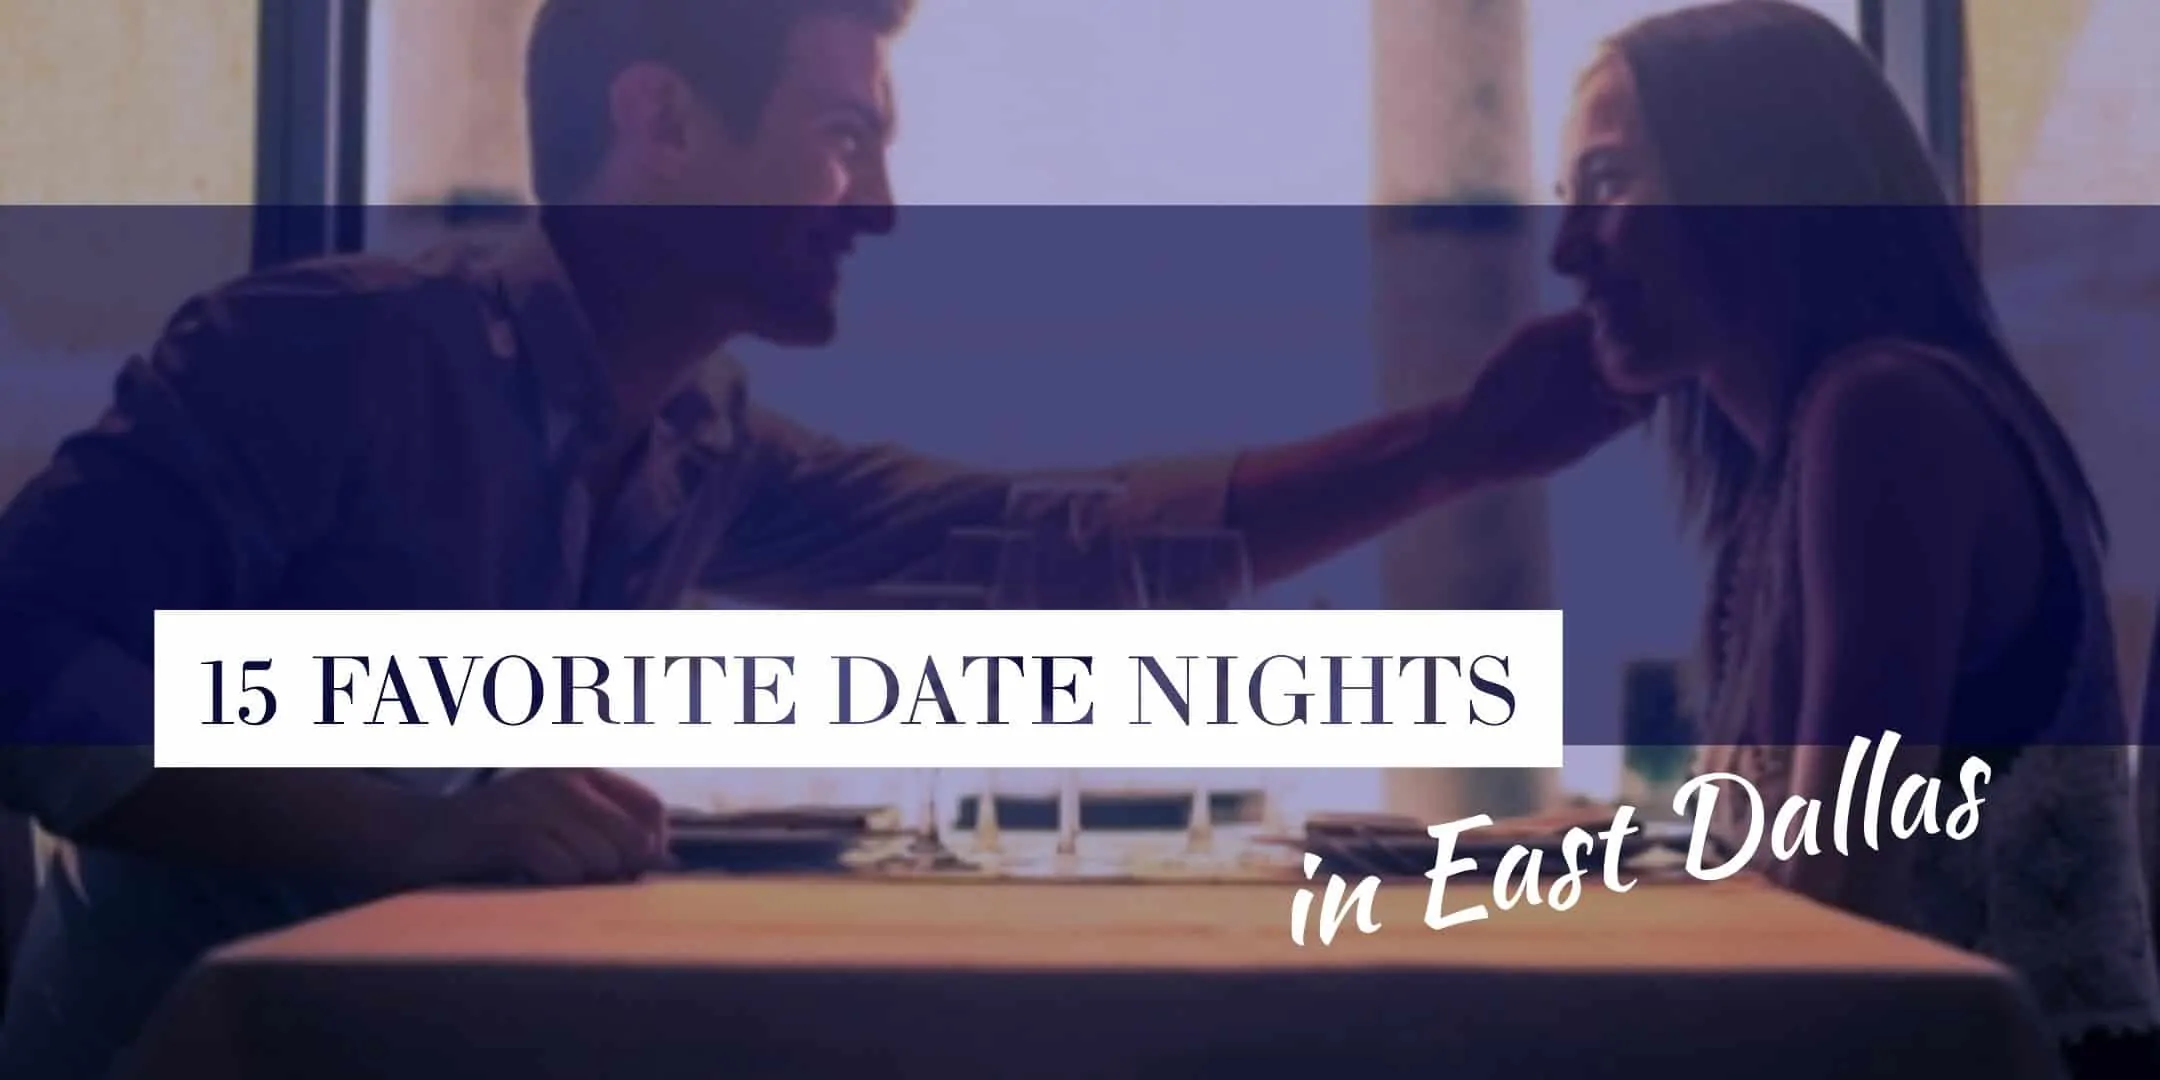 15 Favorite Date Nights in East Dallas